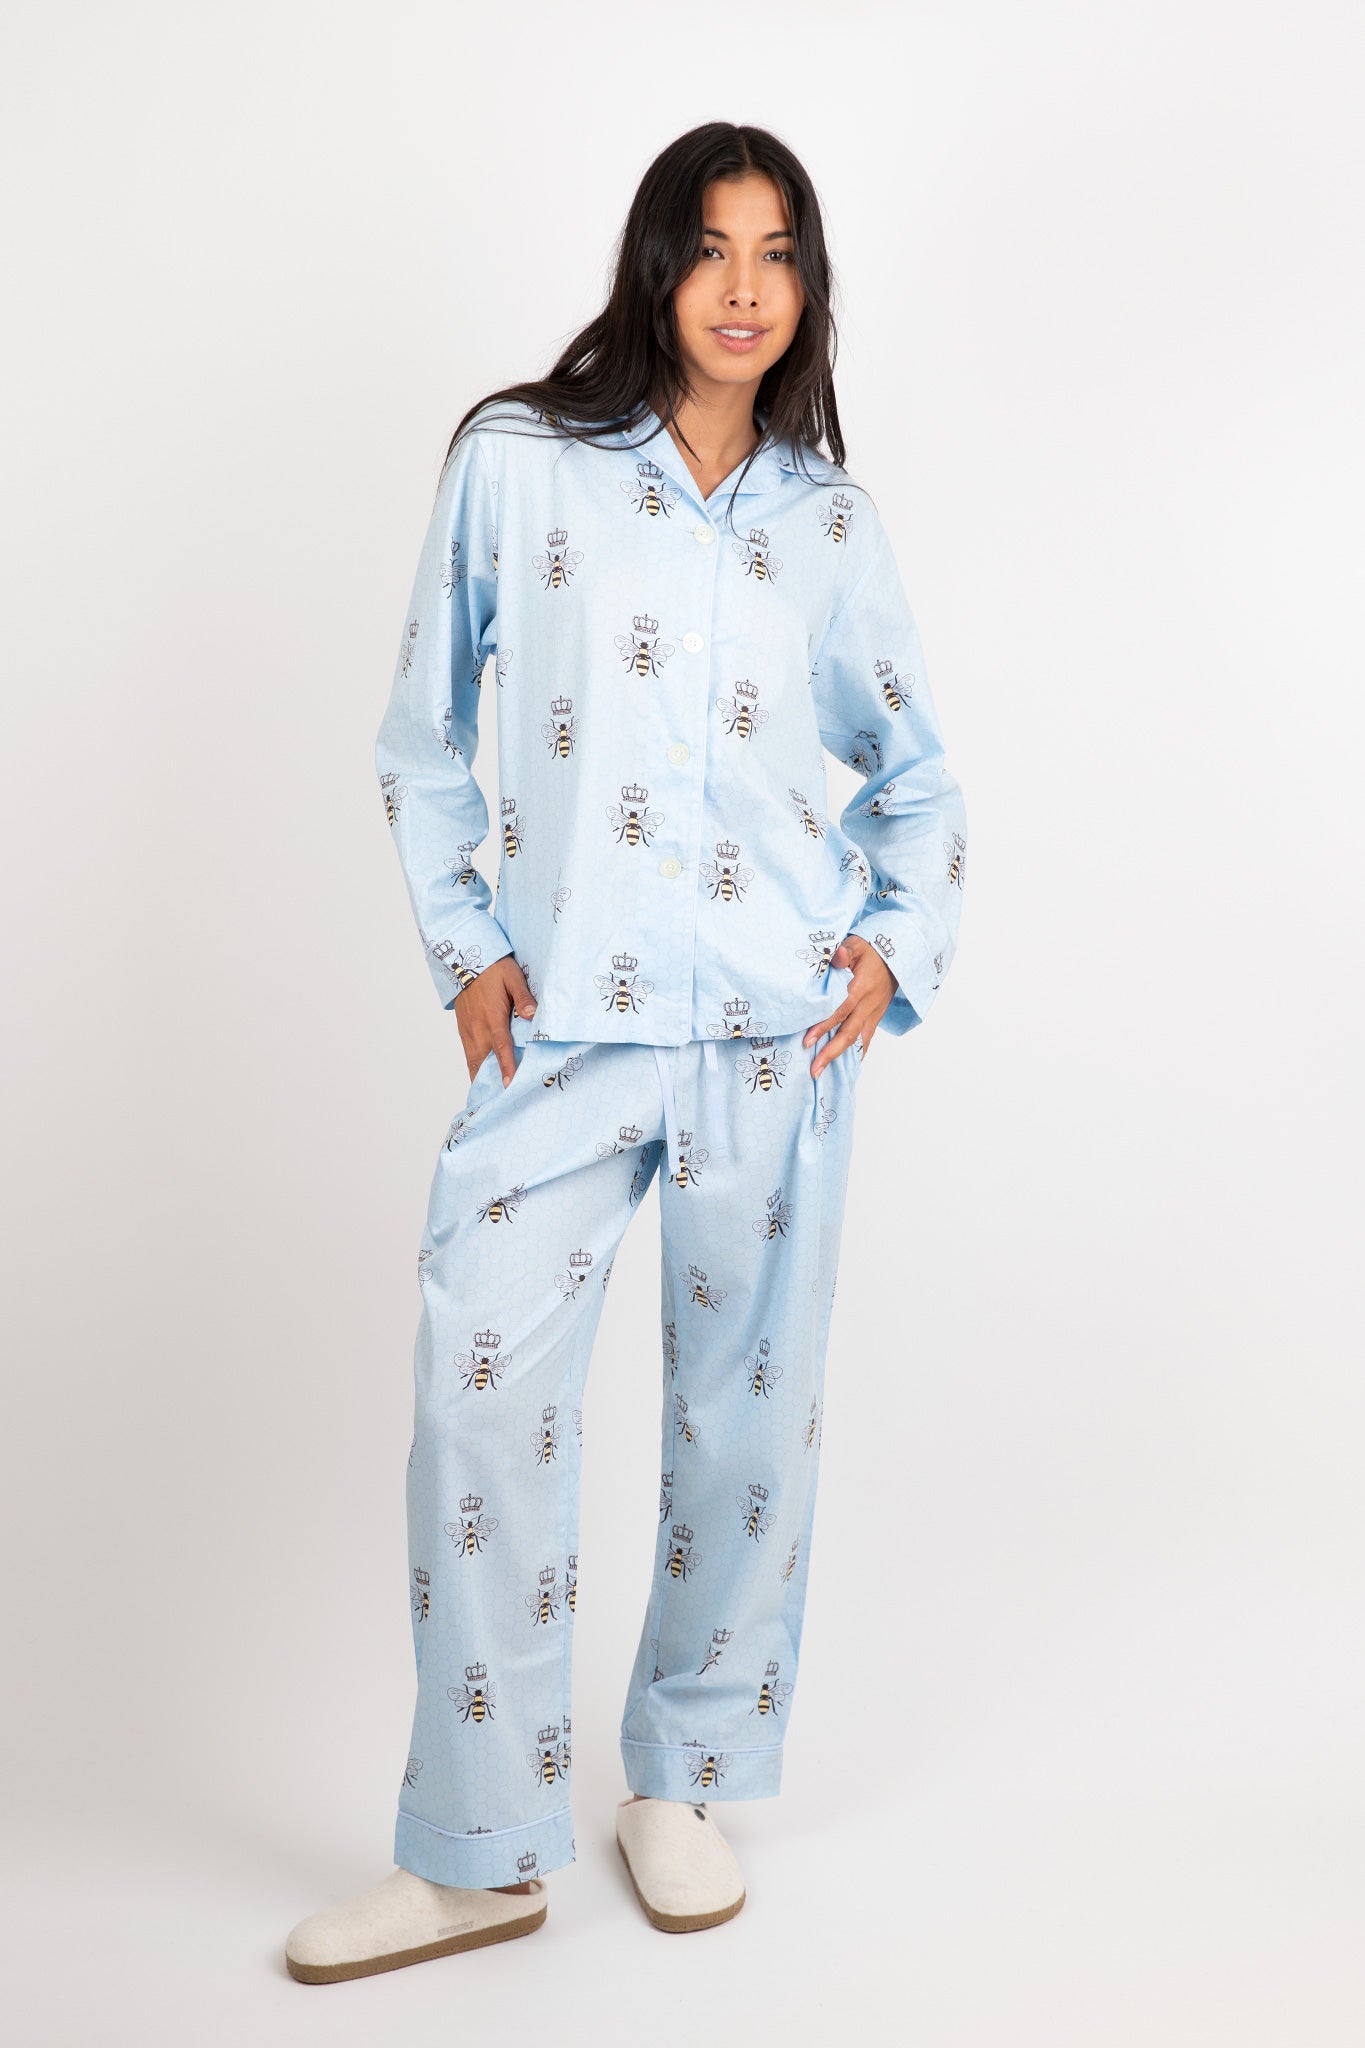 The Cat's Pajamas Women's Queen Bee Classic Pajama Set